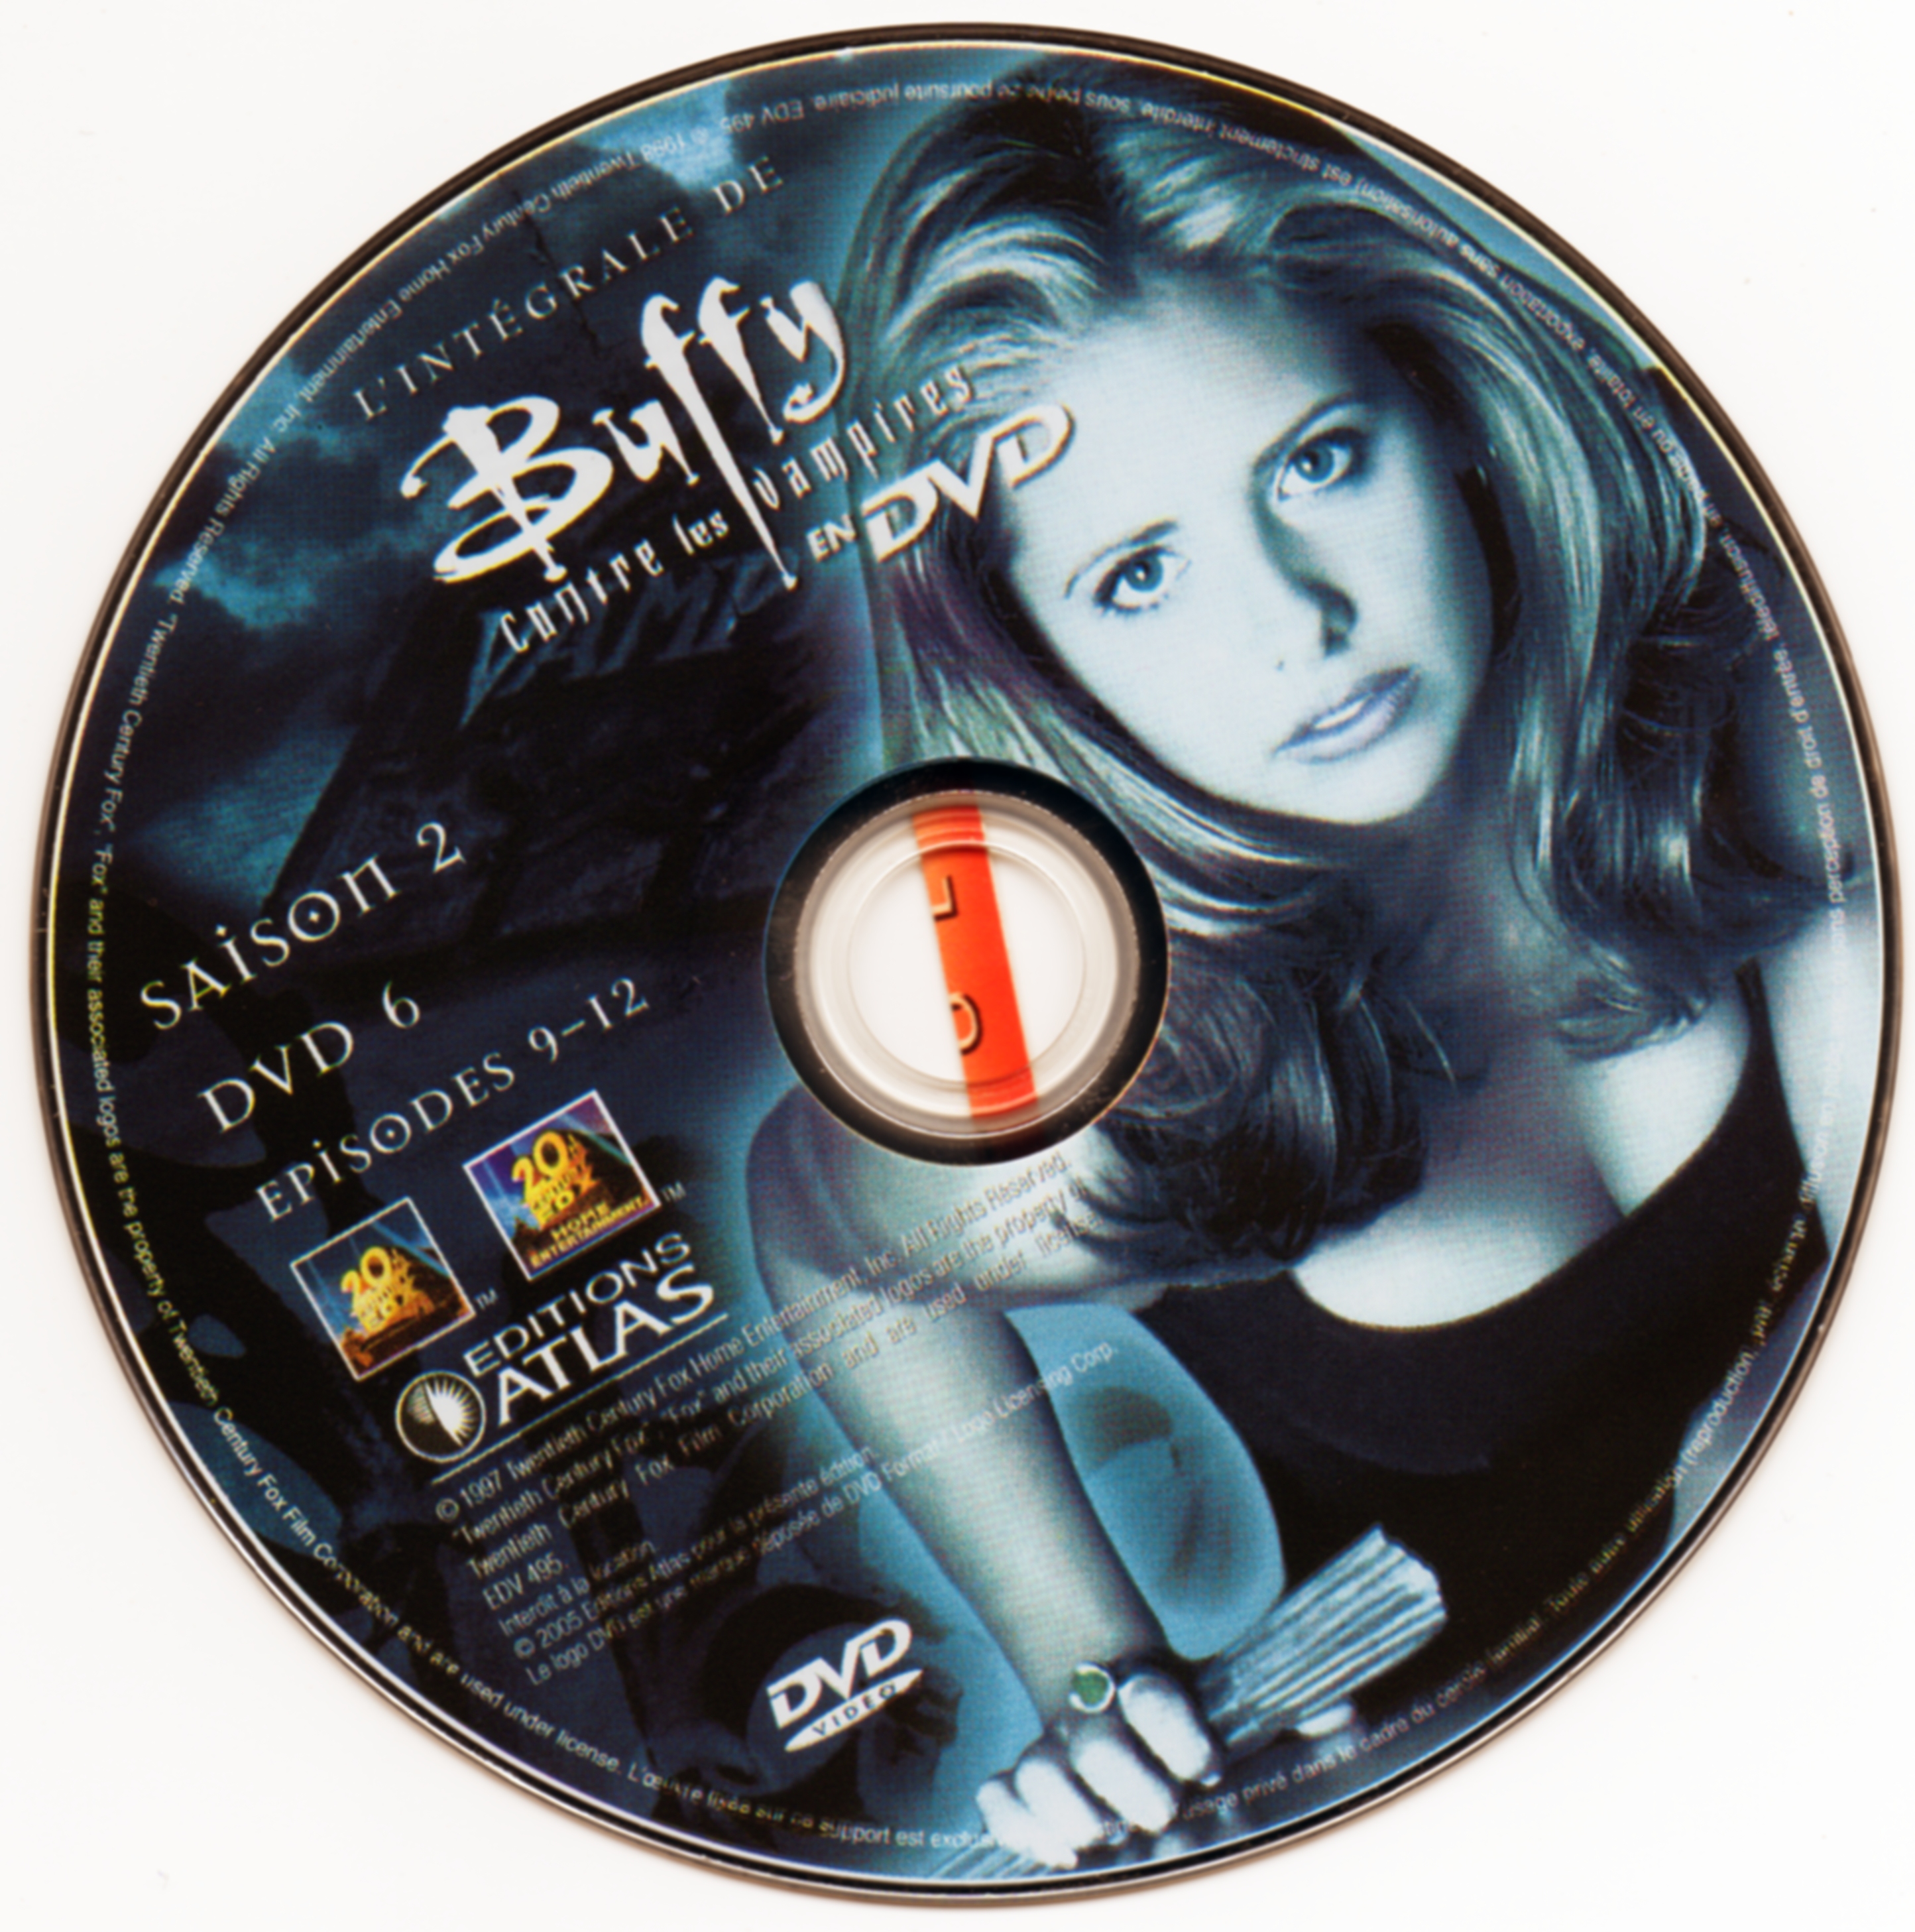 Buffy contre les vampires DVD 06 Ed Atlas